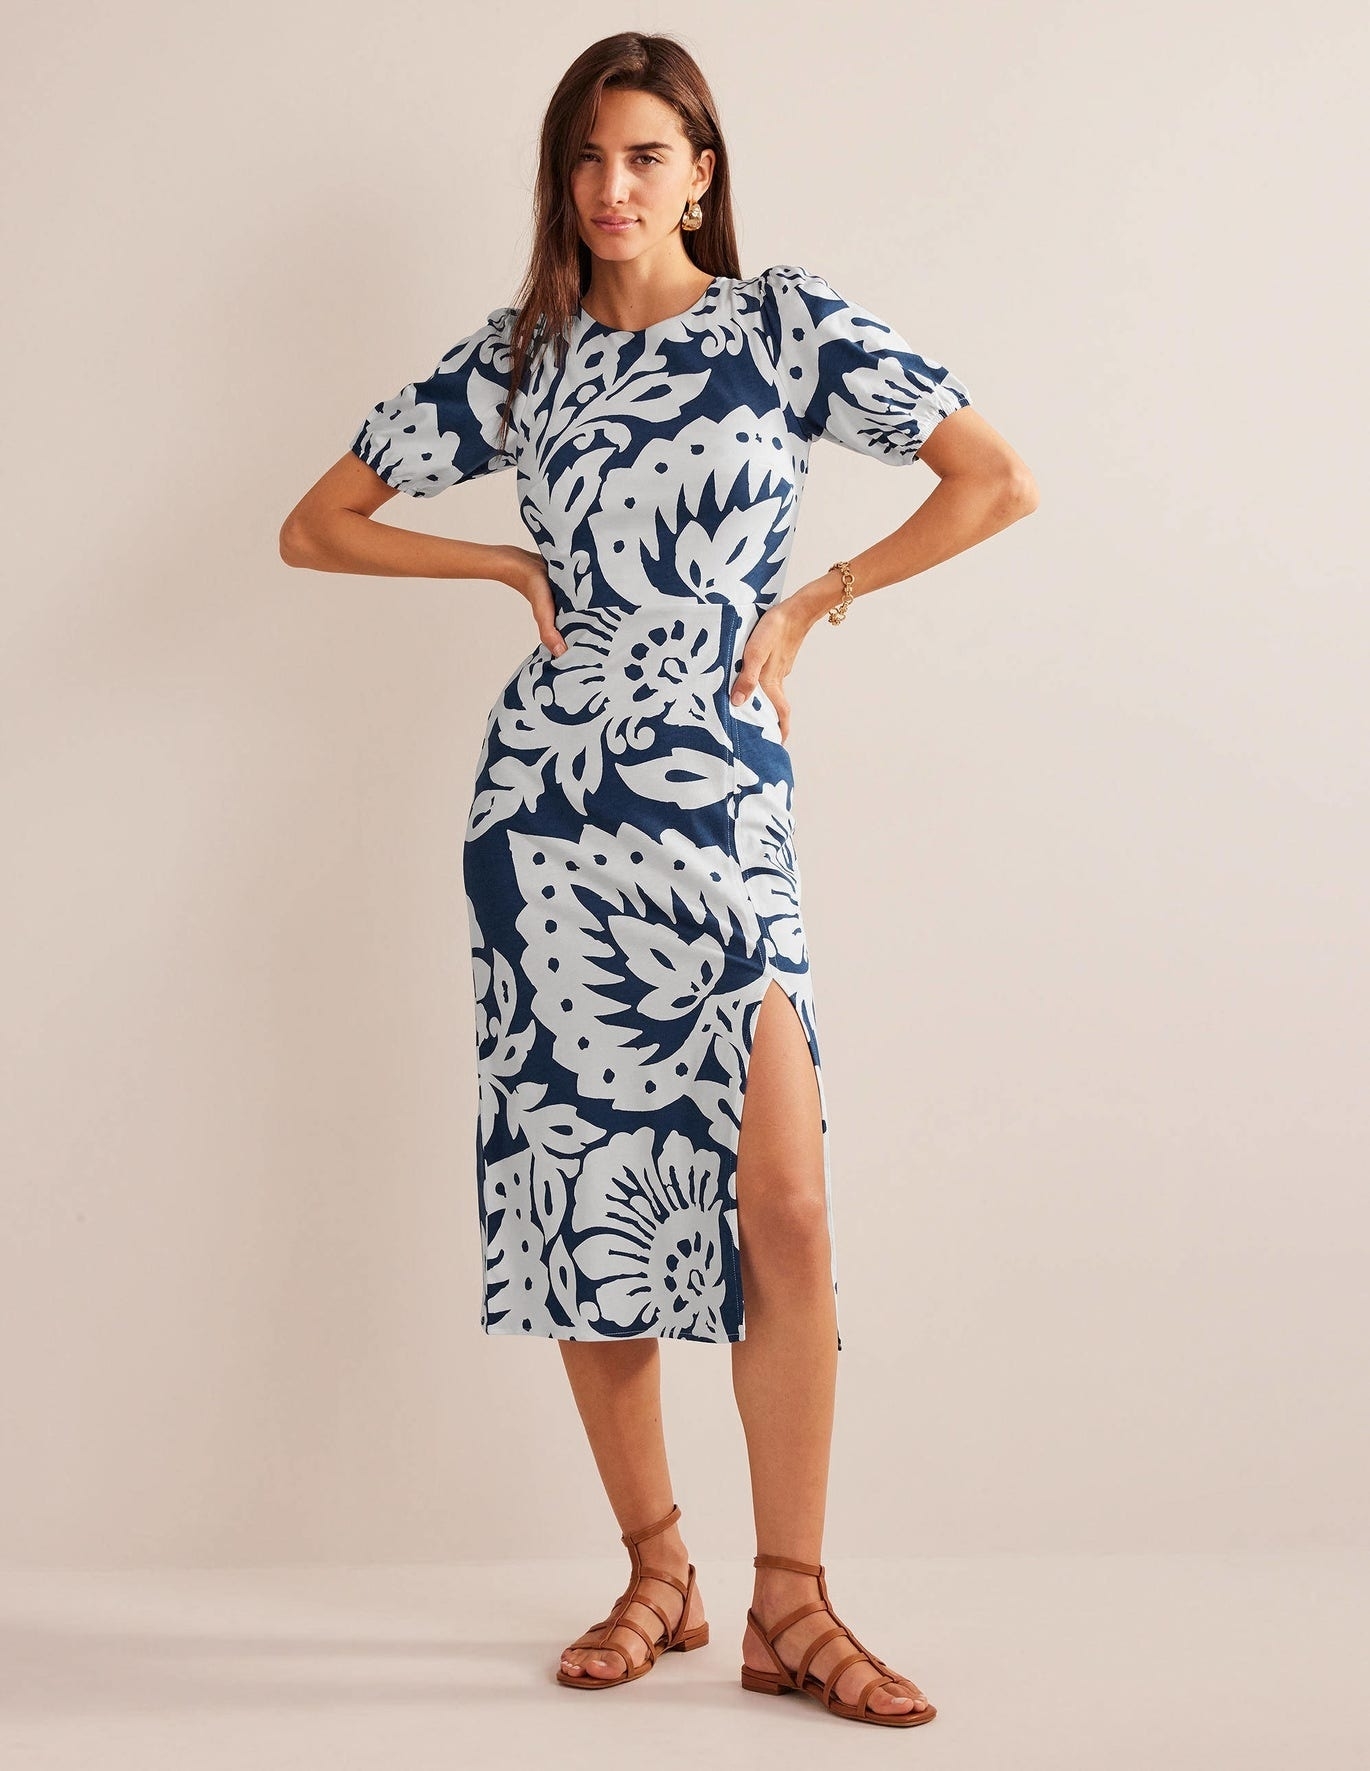 Model wearing printed dress with leg slit.